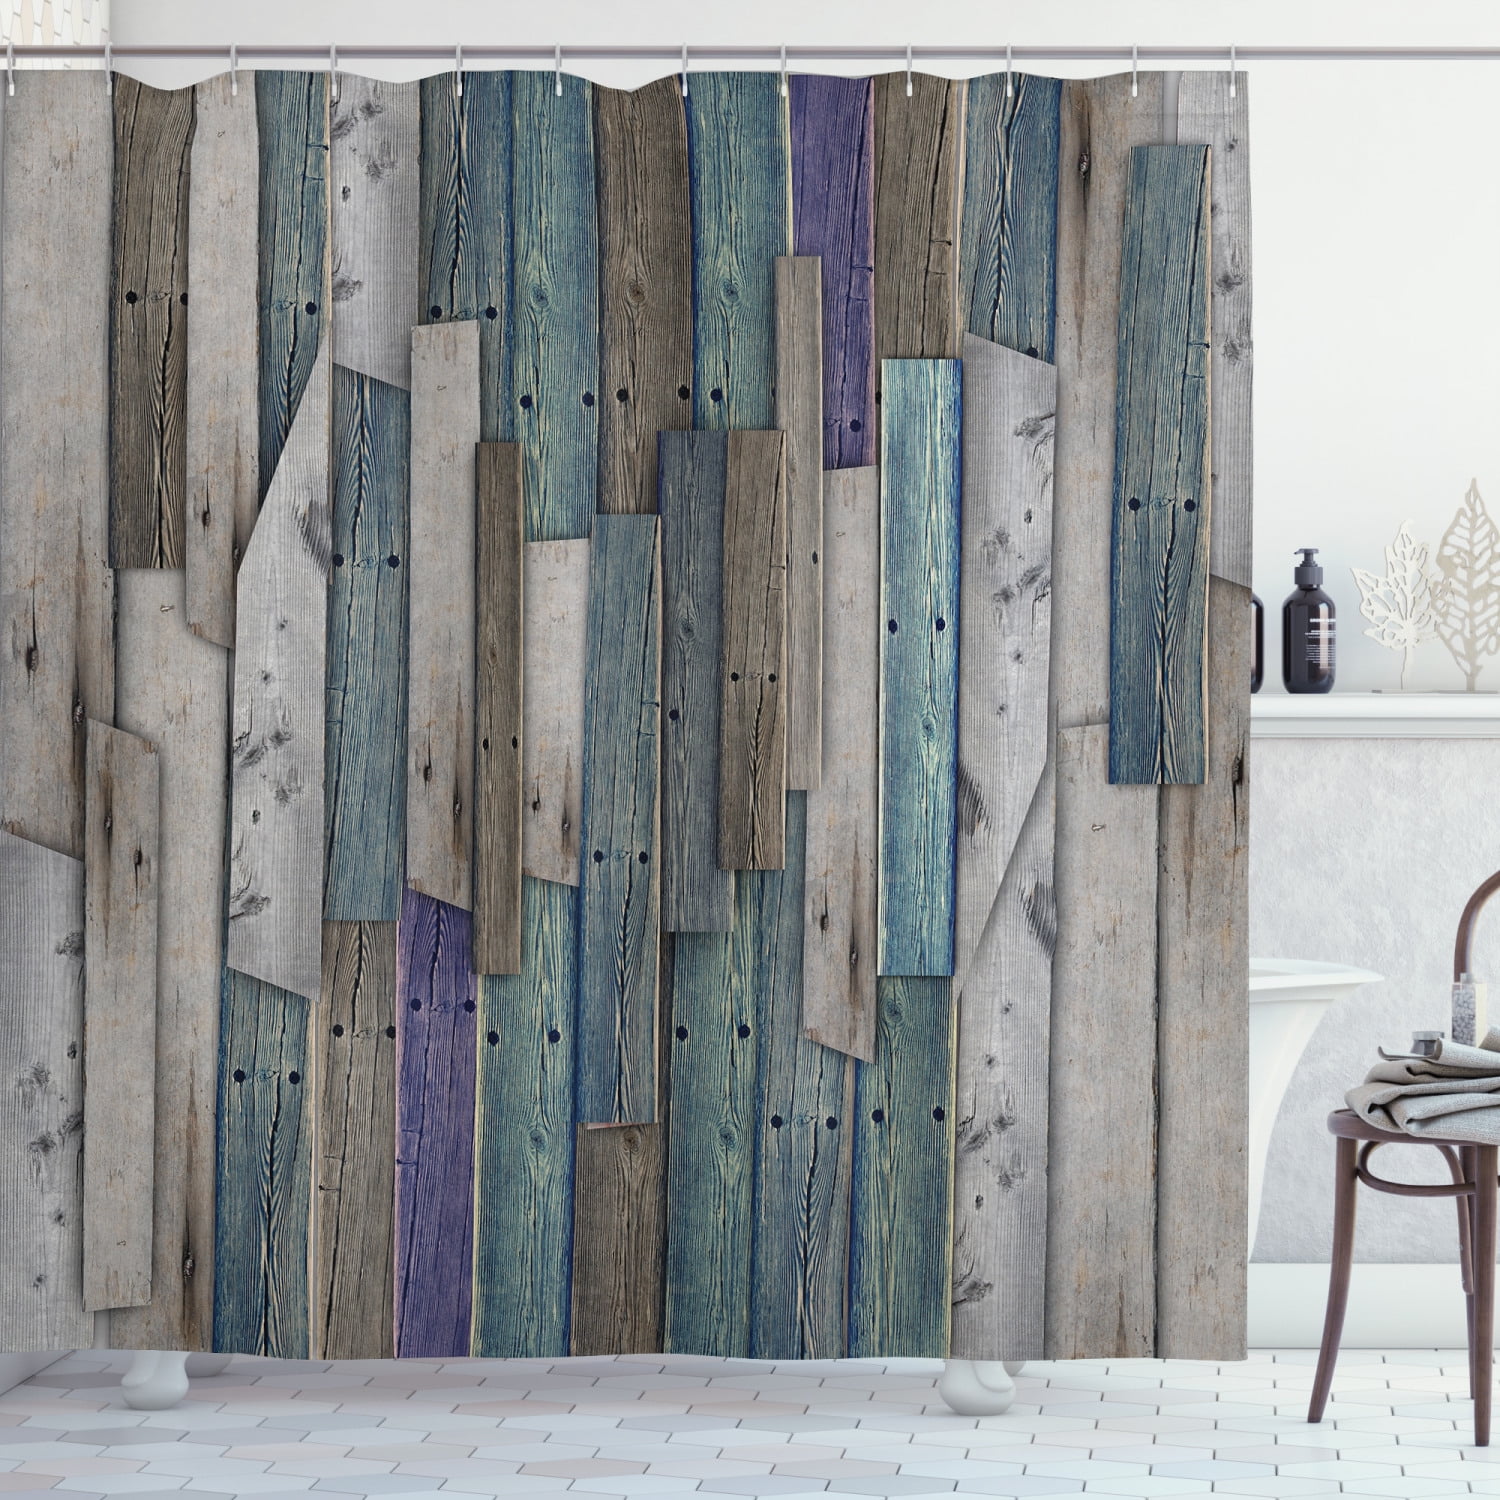 Rustic Grunge Wood Board Door Polyester Fabric Shower Curtain Set Bathroom Hooks 